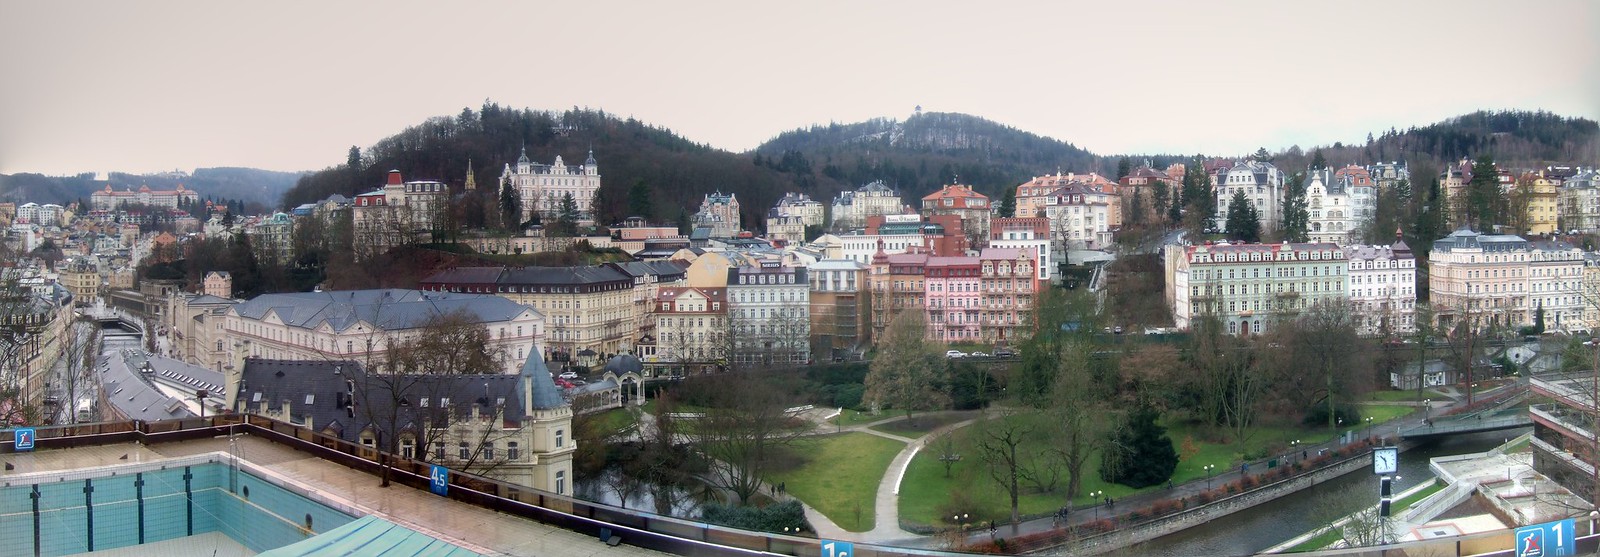 Karlovy Vary, first sight